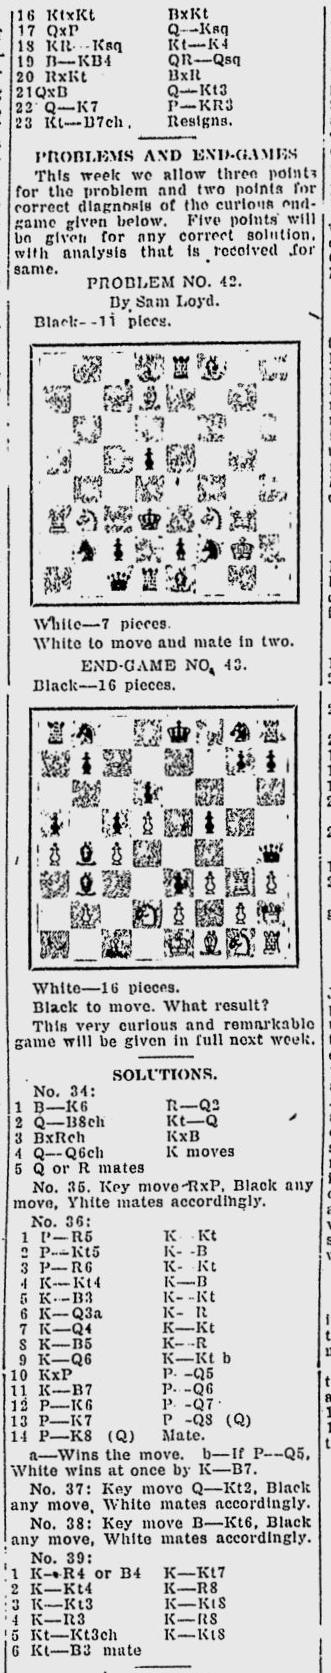 1923.11.10-03 Providence News.jpg